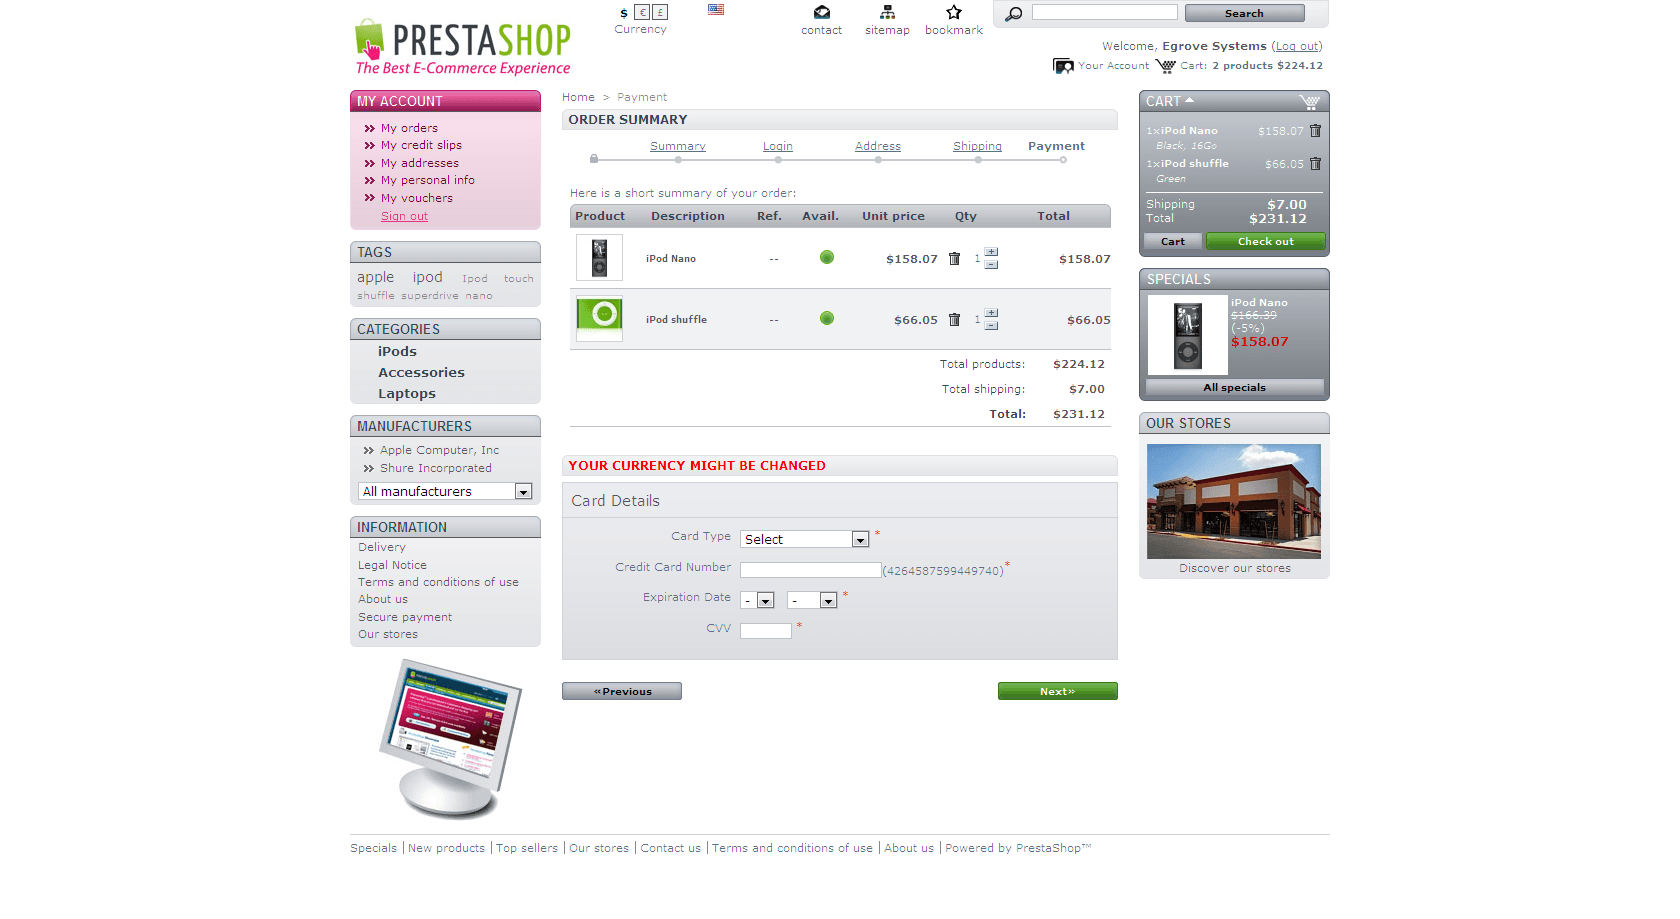 PrestaShop First Data payment